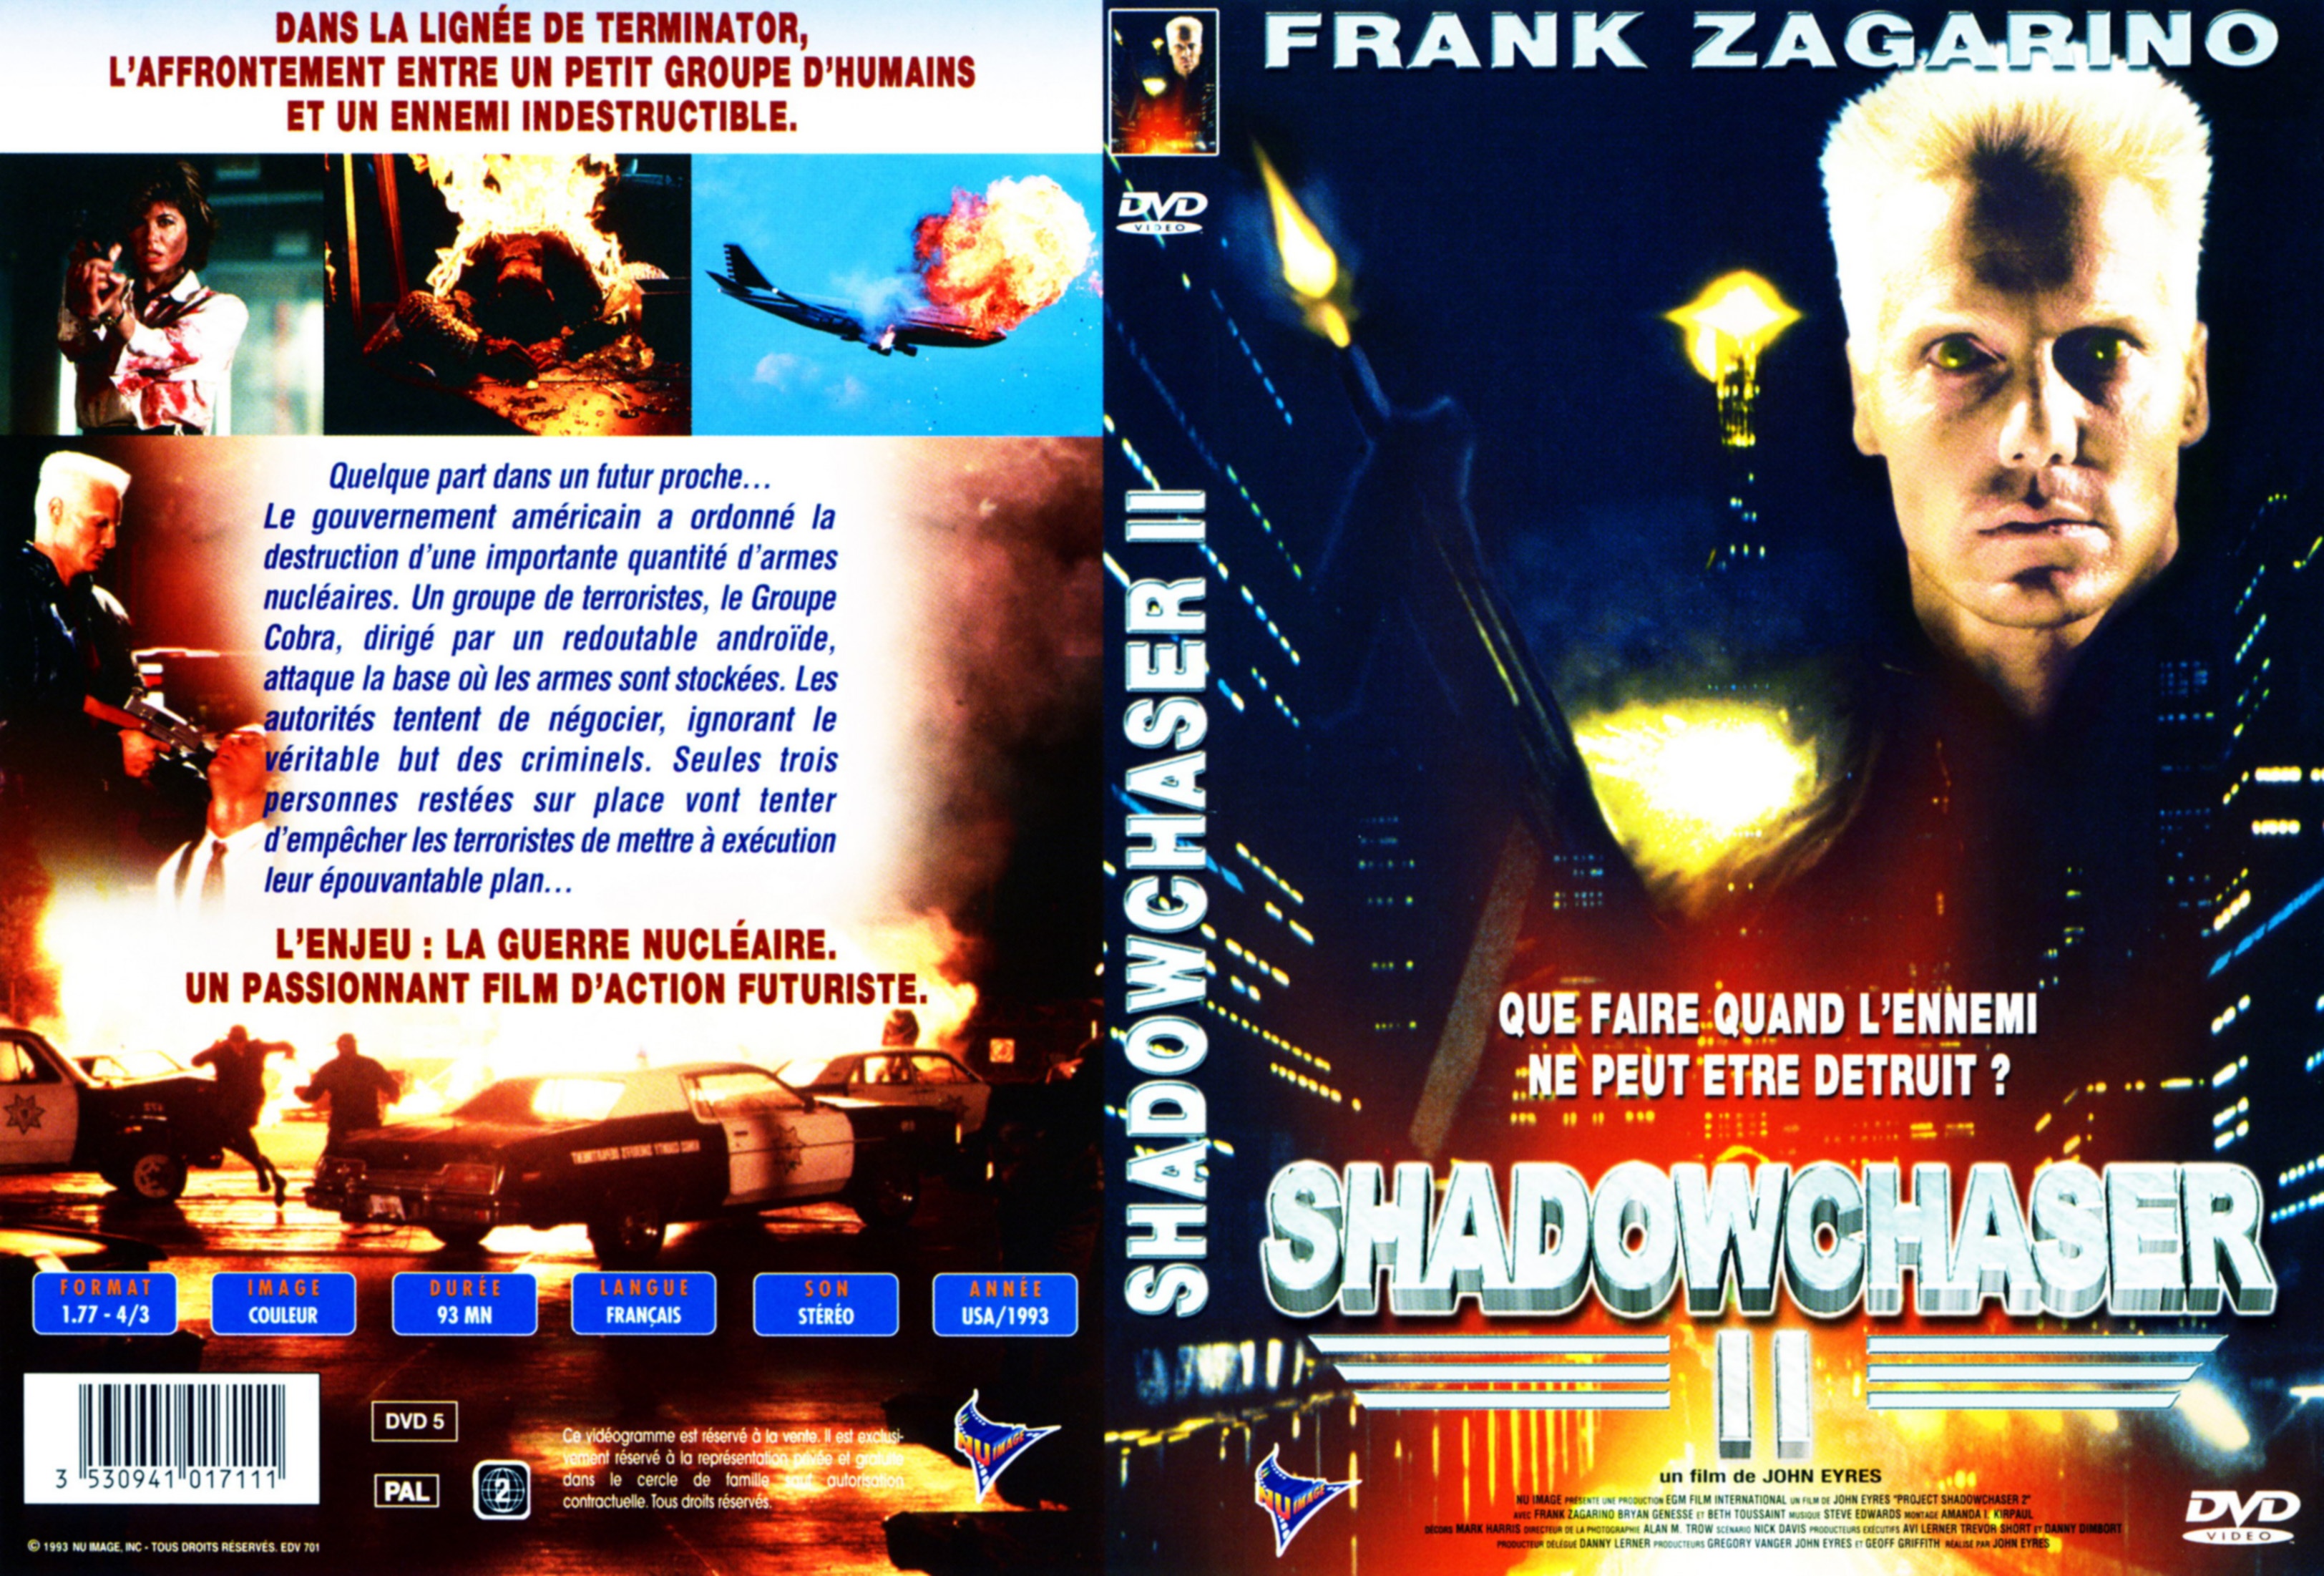 Jaquette DVD Shadowchaser 2